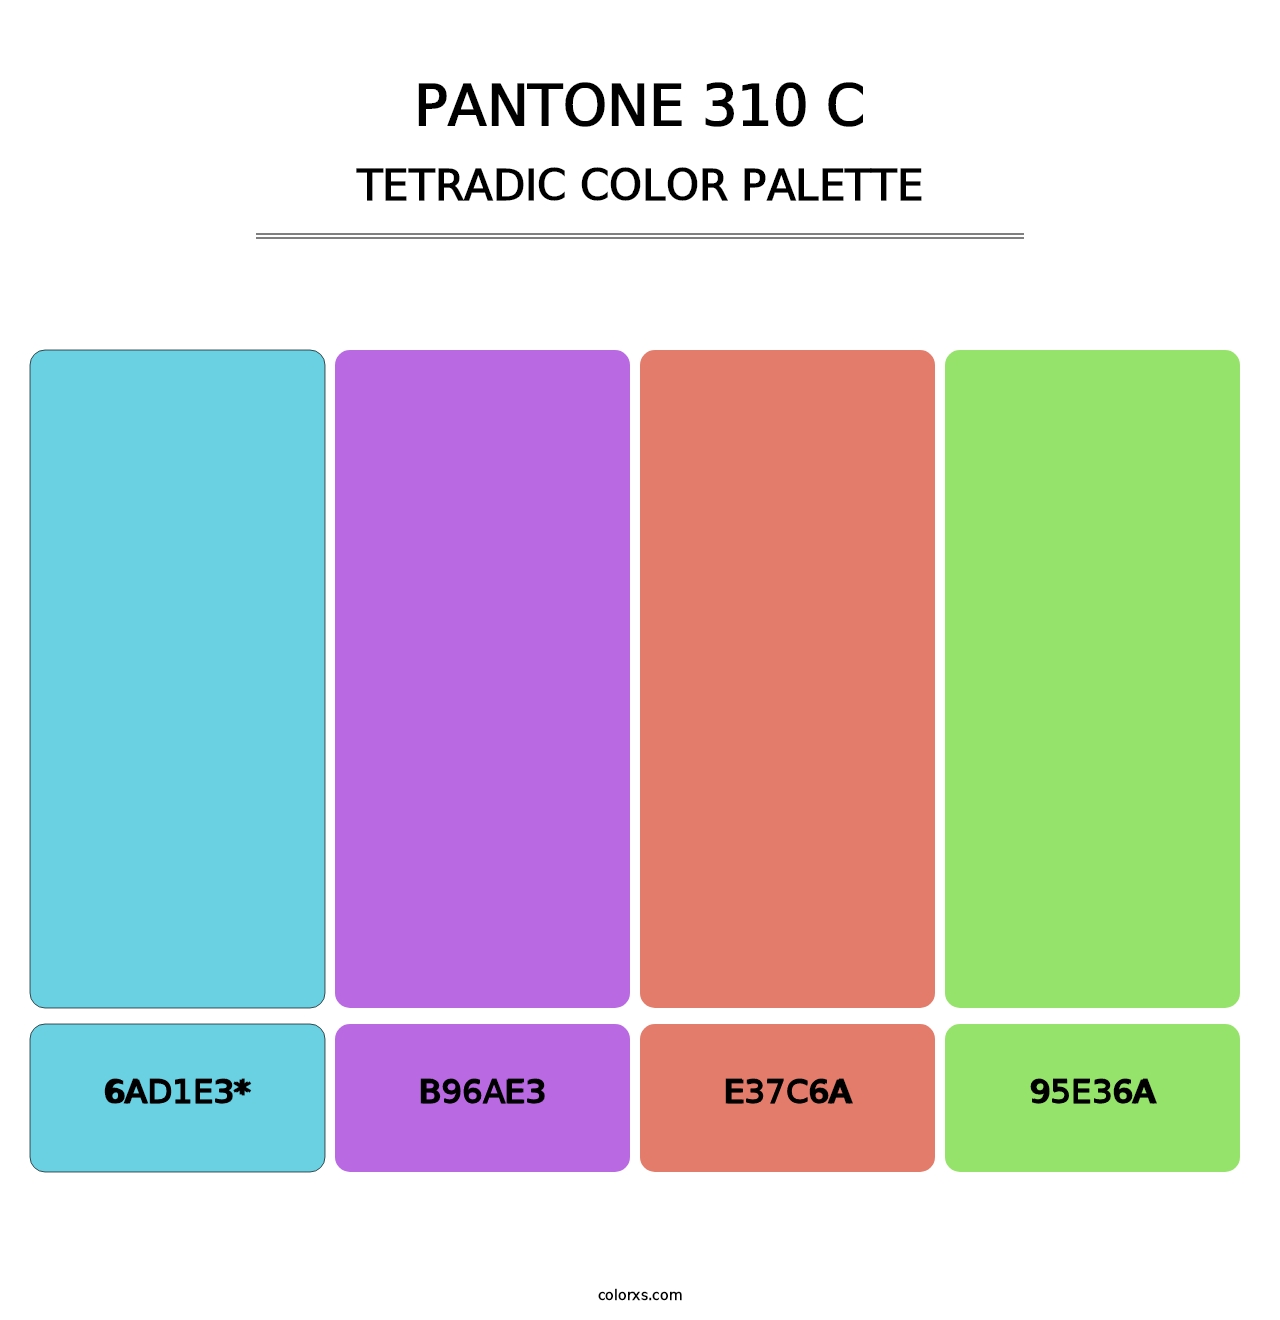 PANTONE 310 C - Tetradic Color Palette